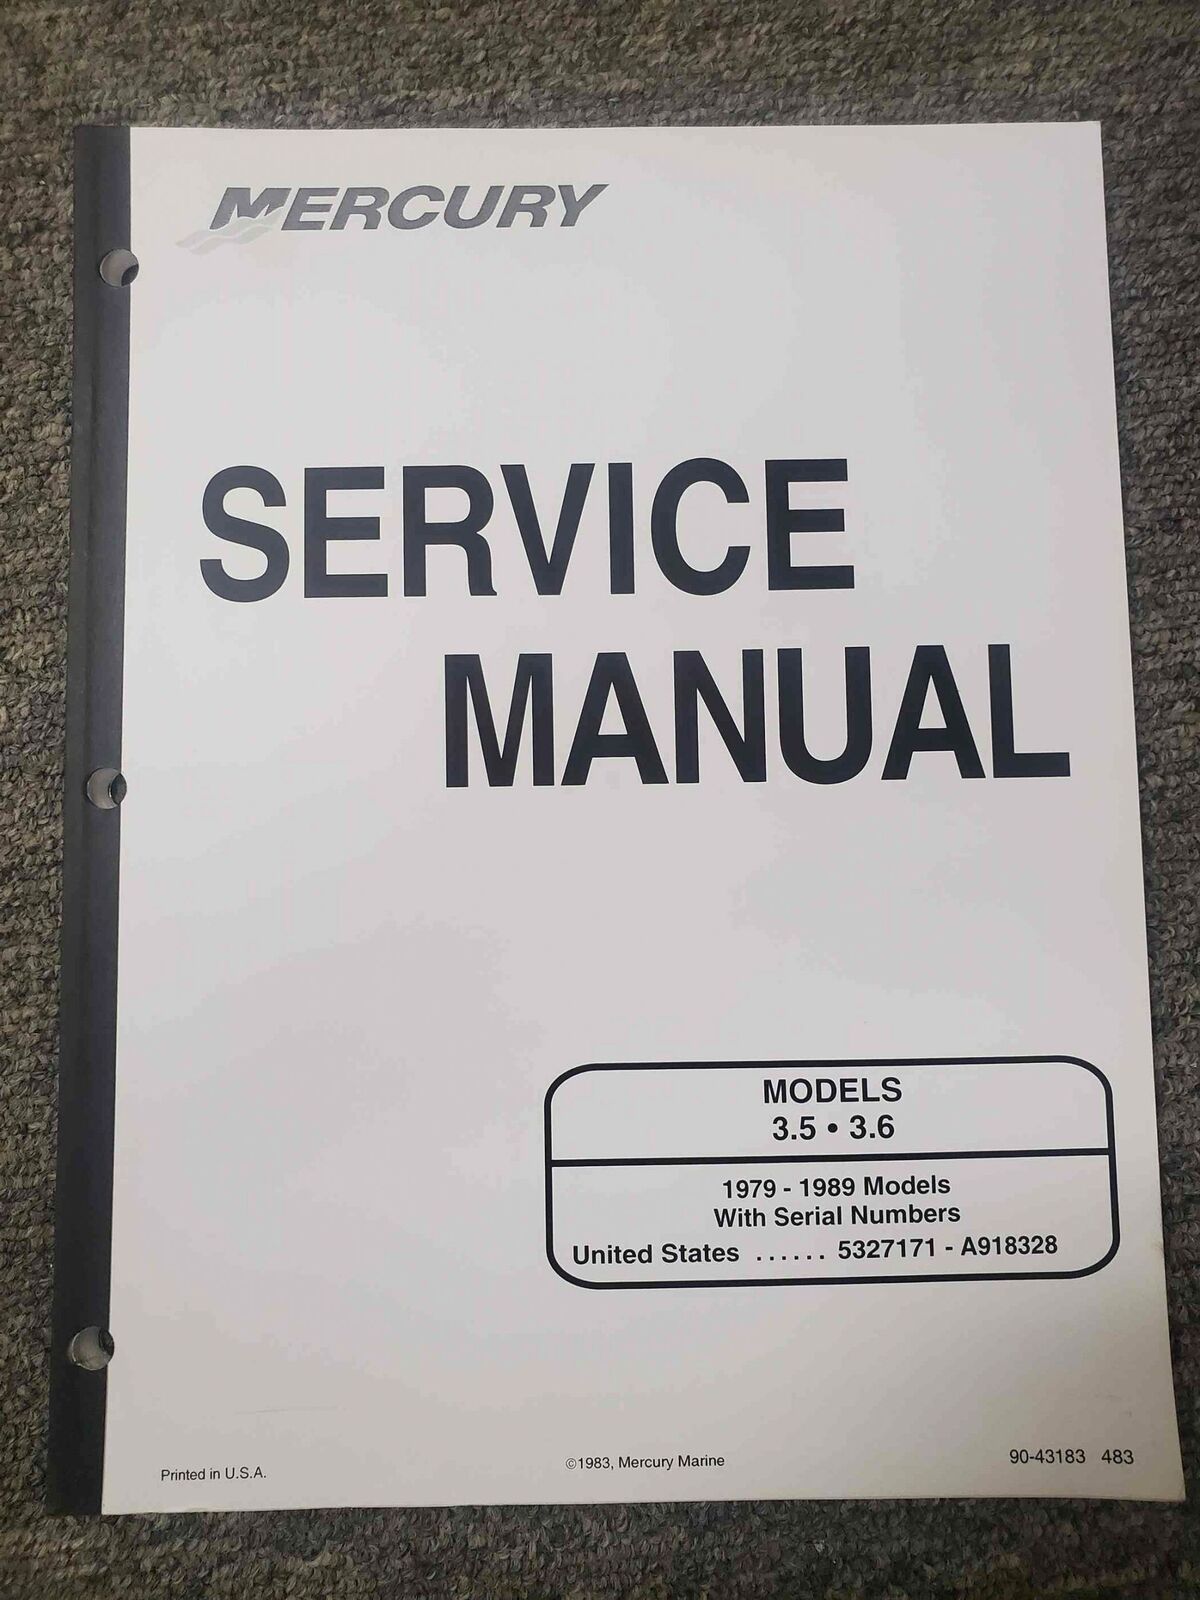 Mercury 3.5/3.6 Service Manual [90-43183]